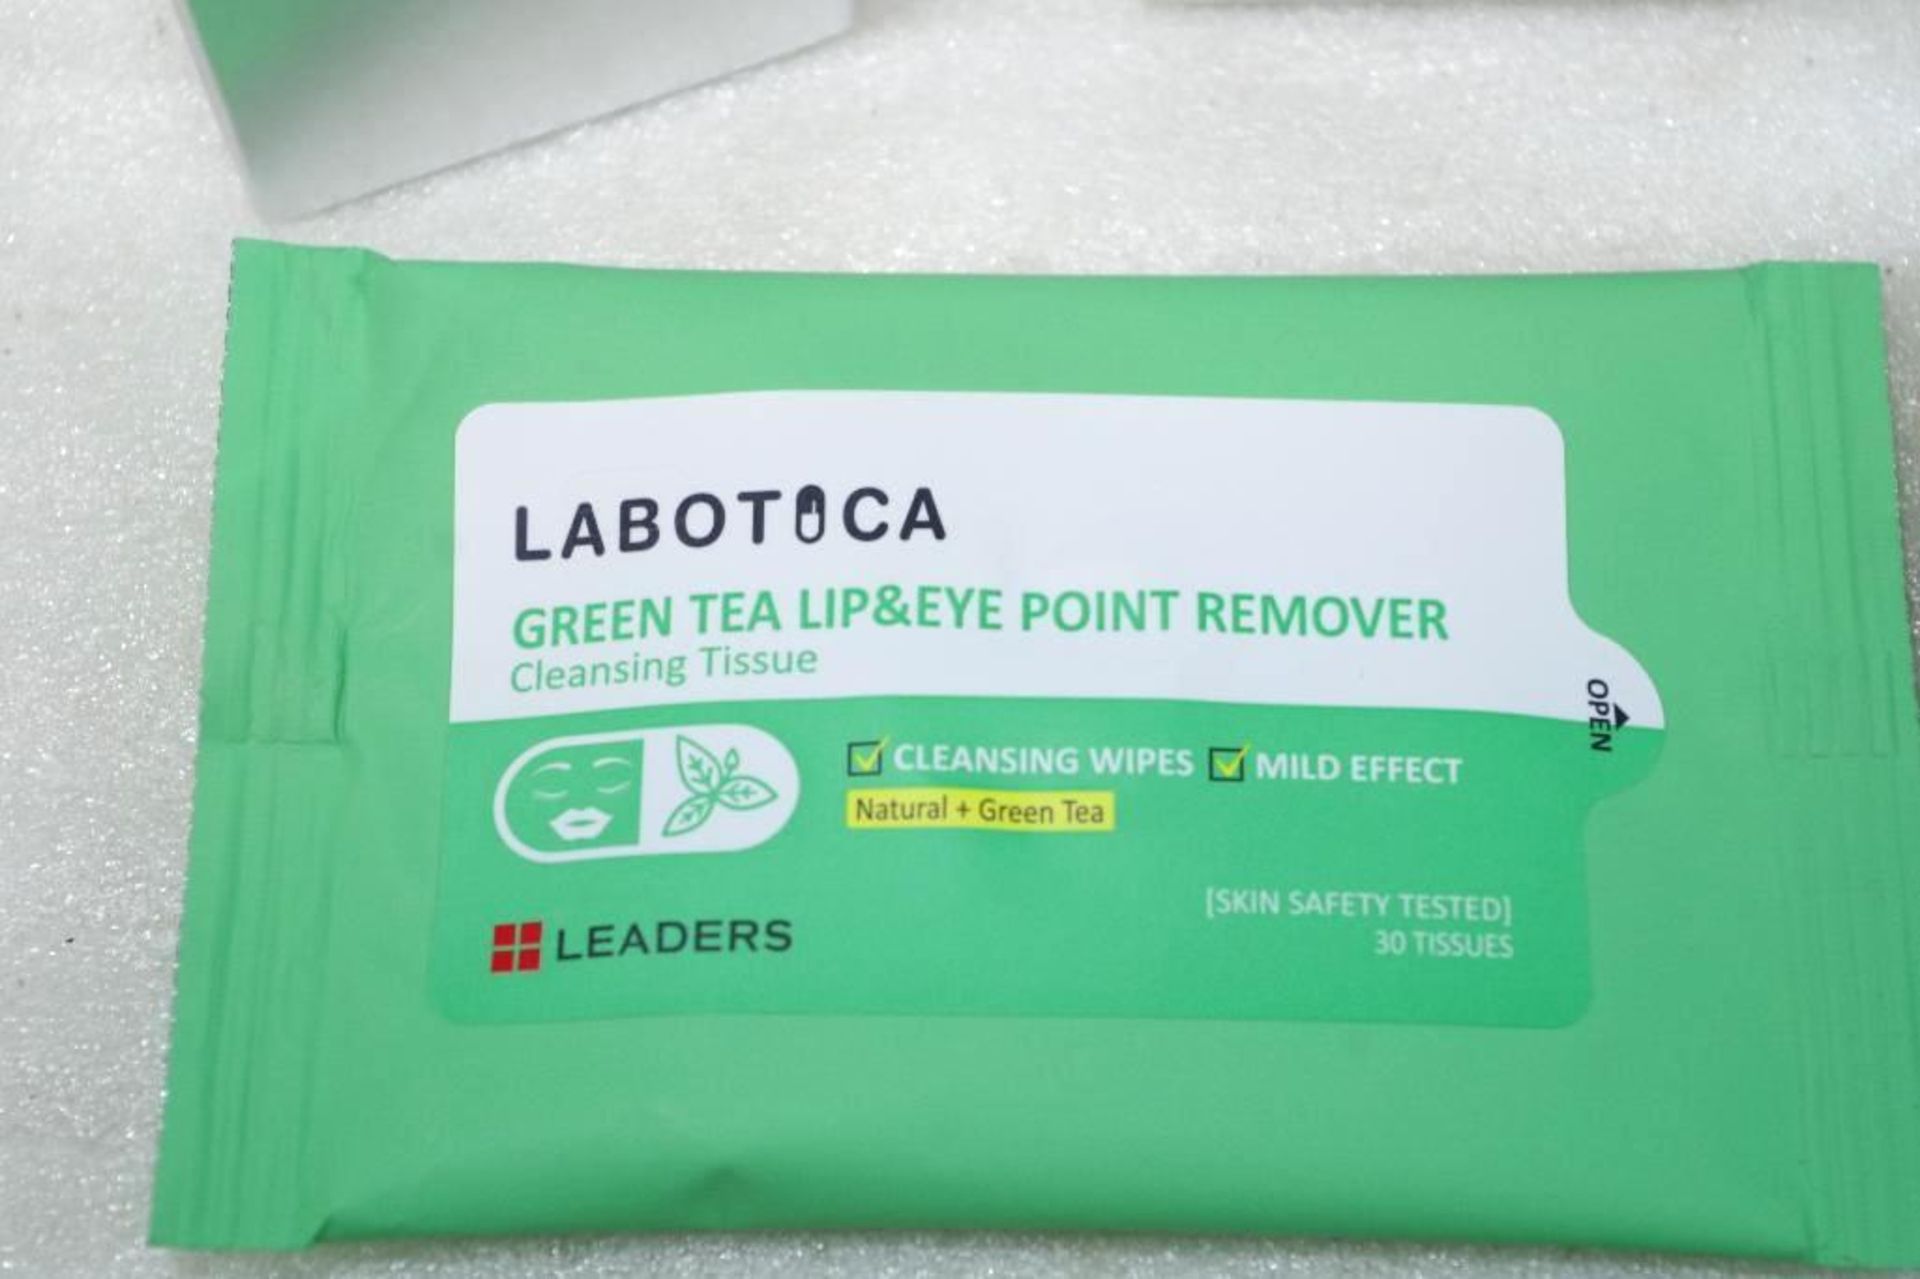 [QTY] NEW LABOTICA Transforming Liquid Foil Mask & Green Tea Lip & Eye Point Remover - Image 4 of 5